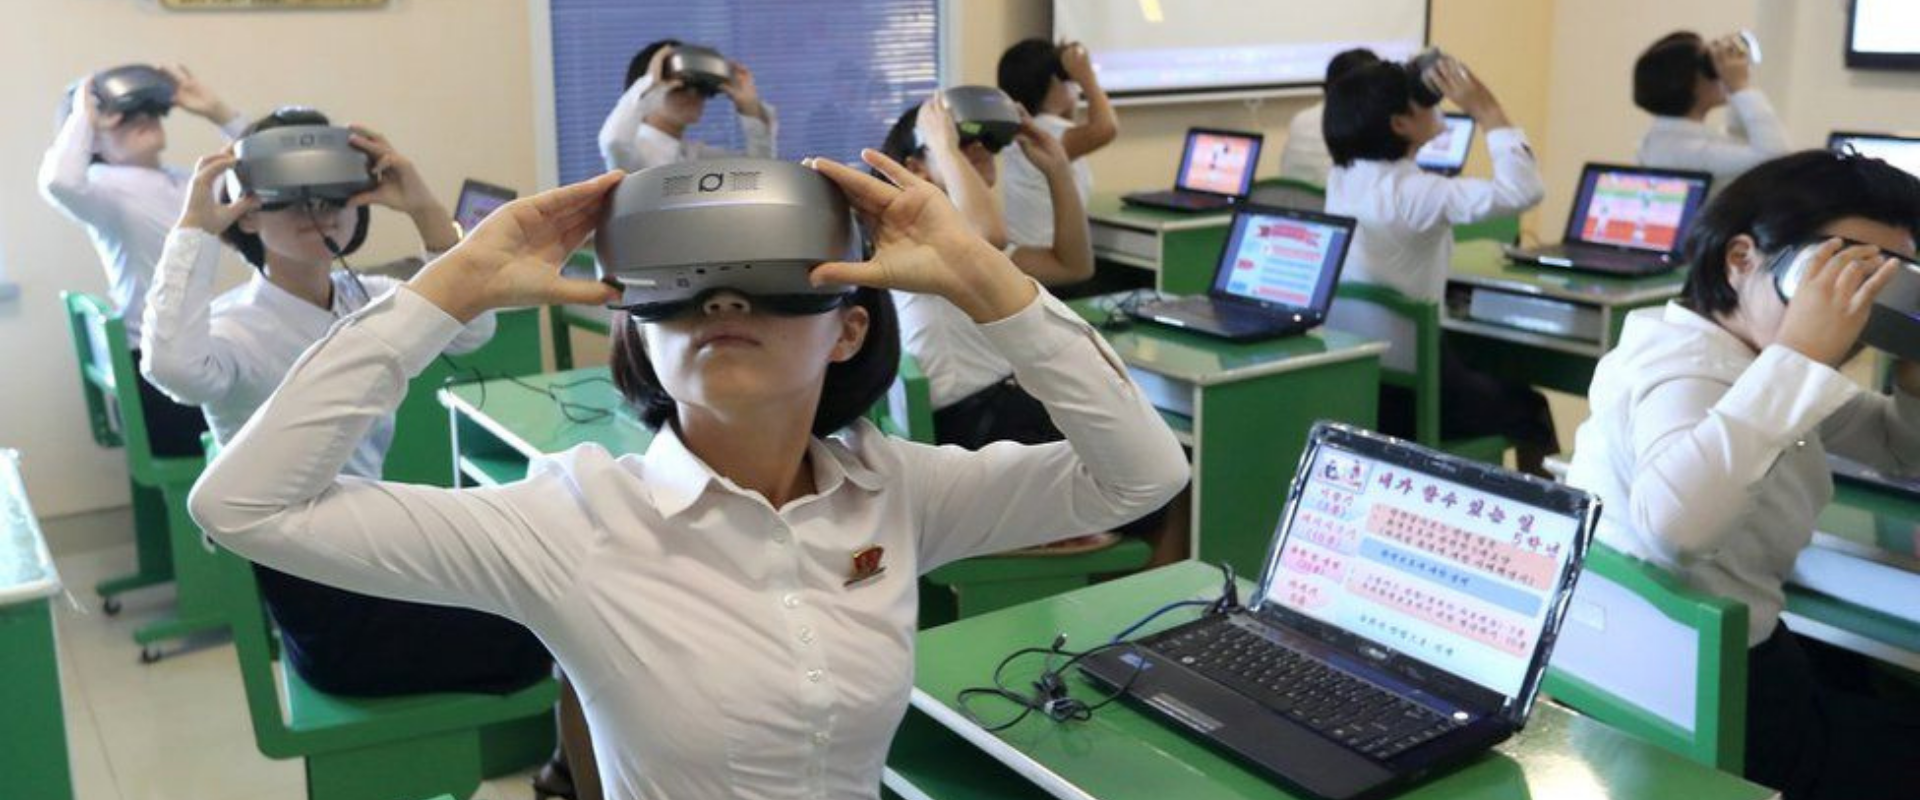 VR in north Korea